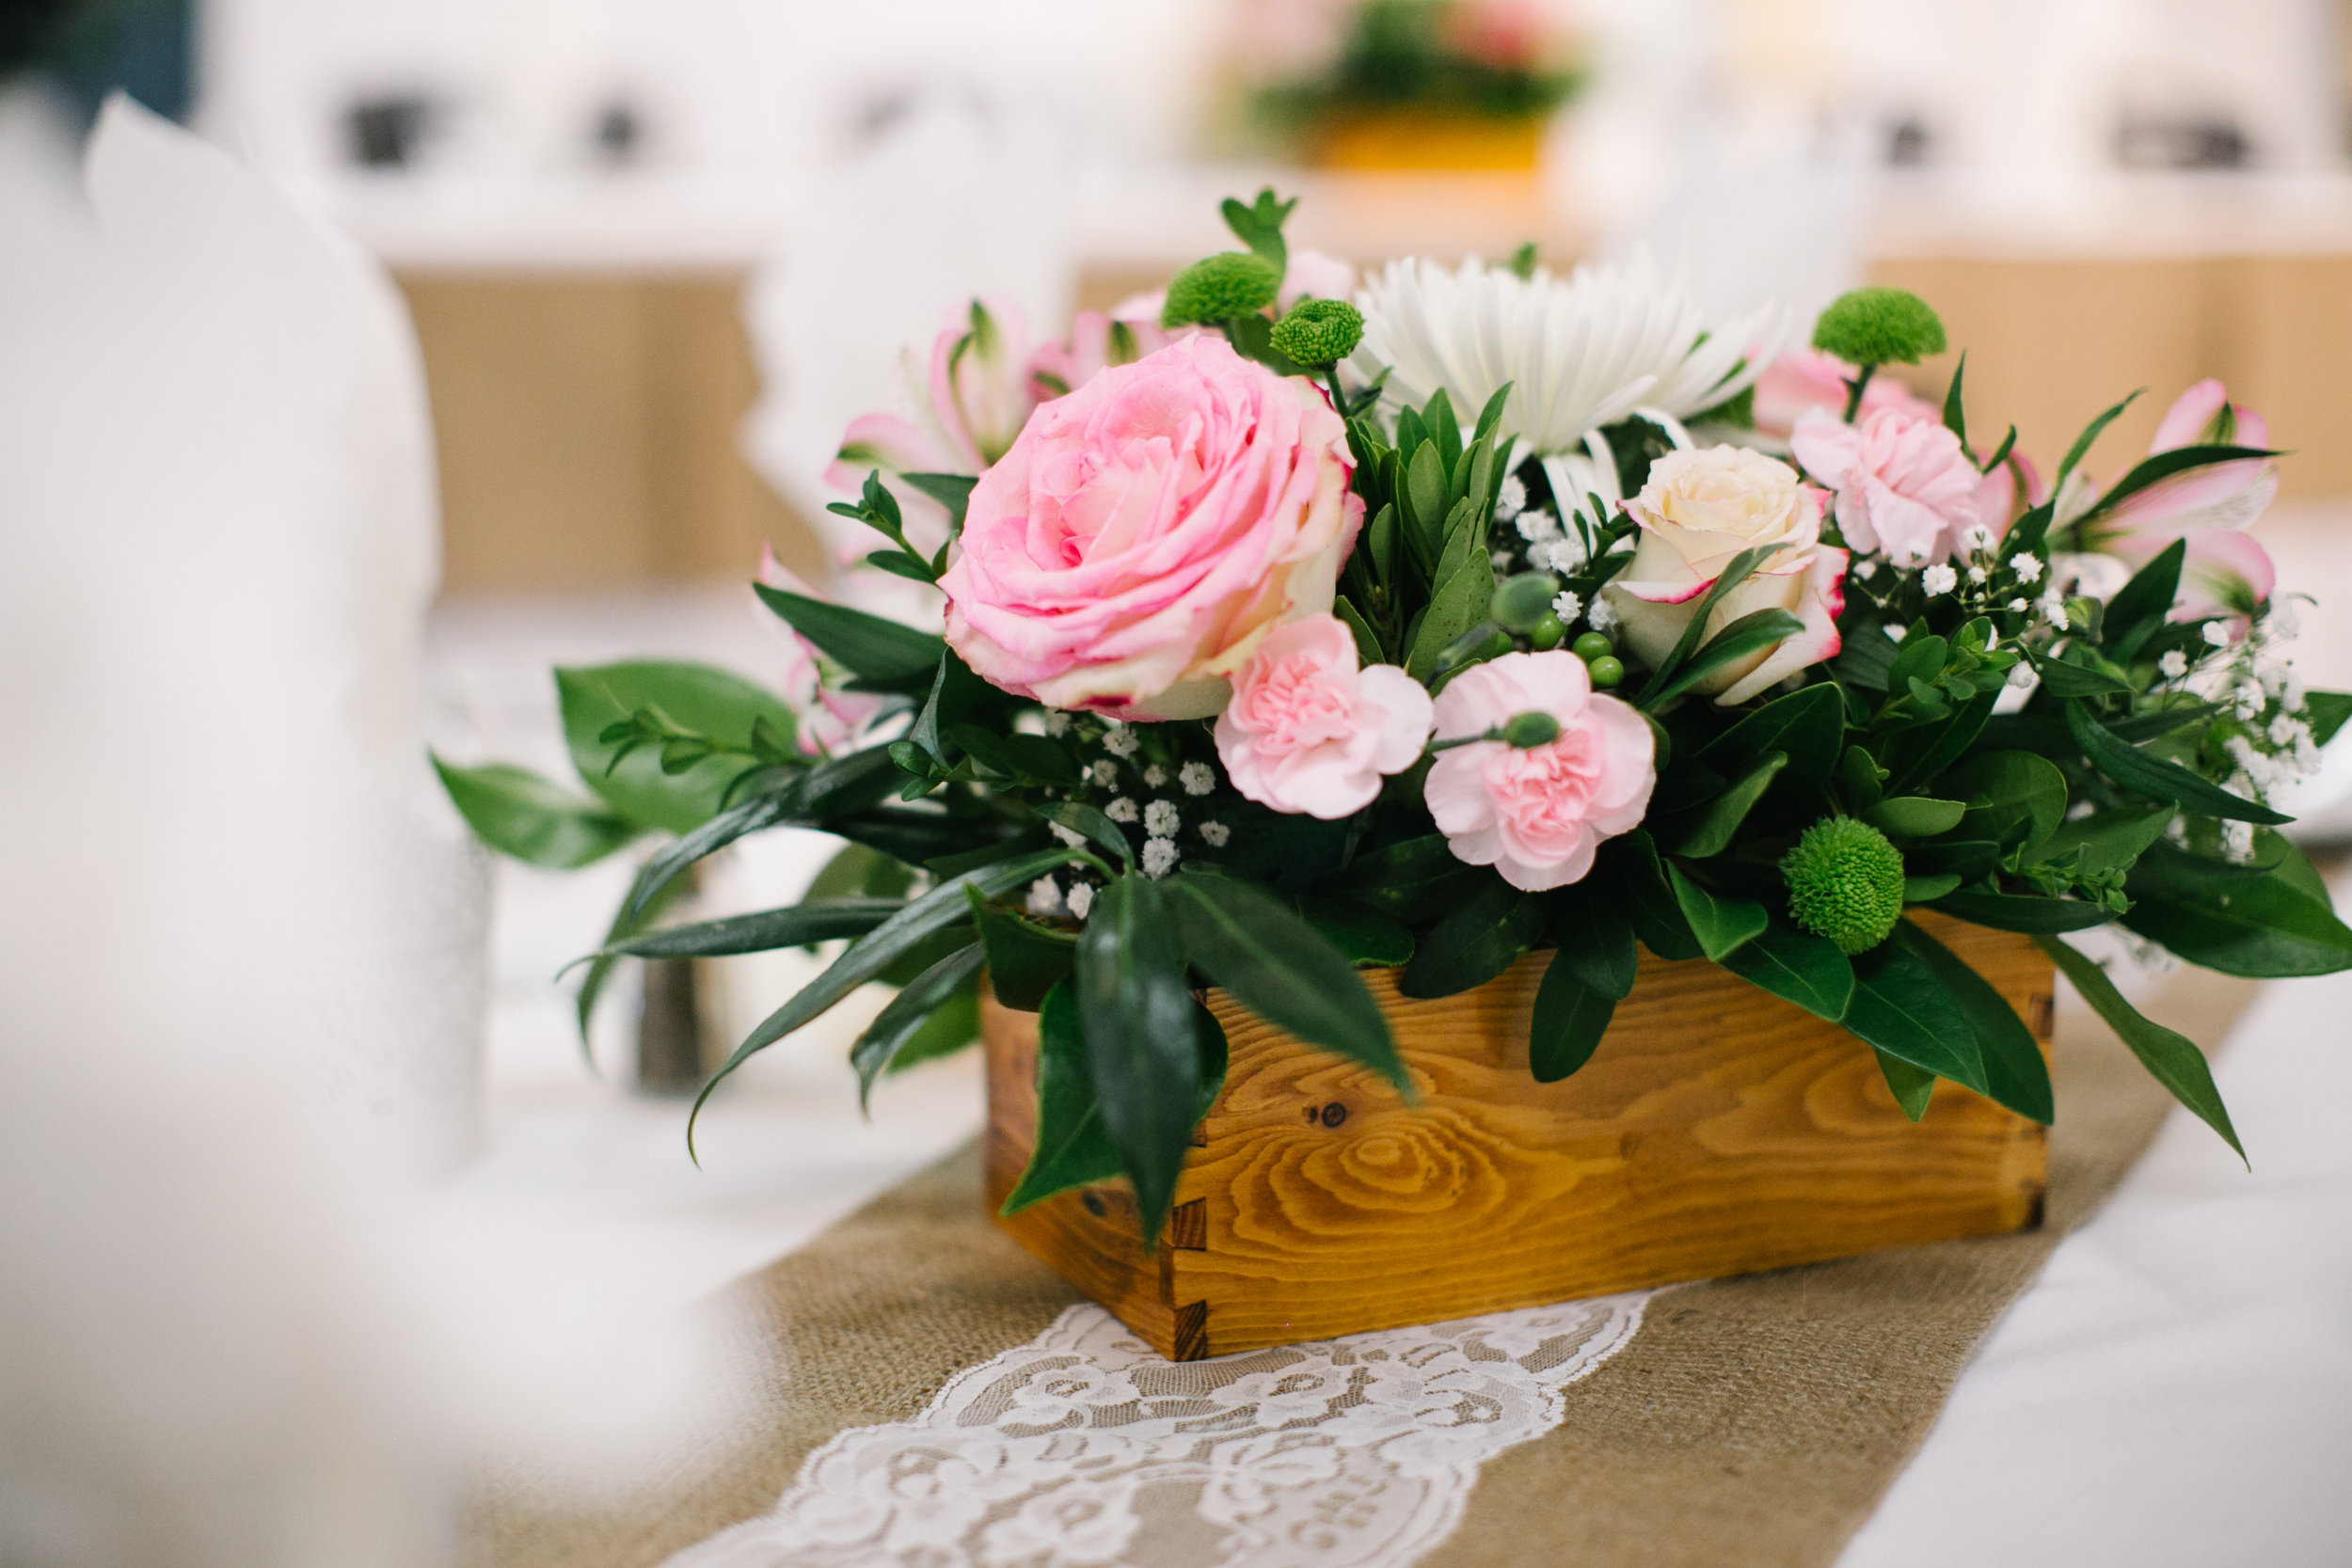  Wedding centrepiece by Floral design by Lili, Abbotsford wedding florist. 